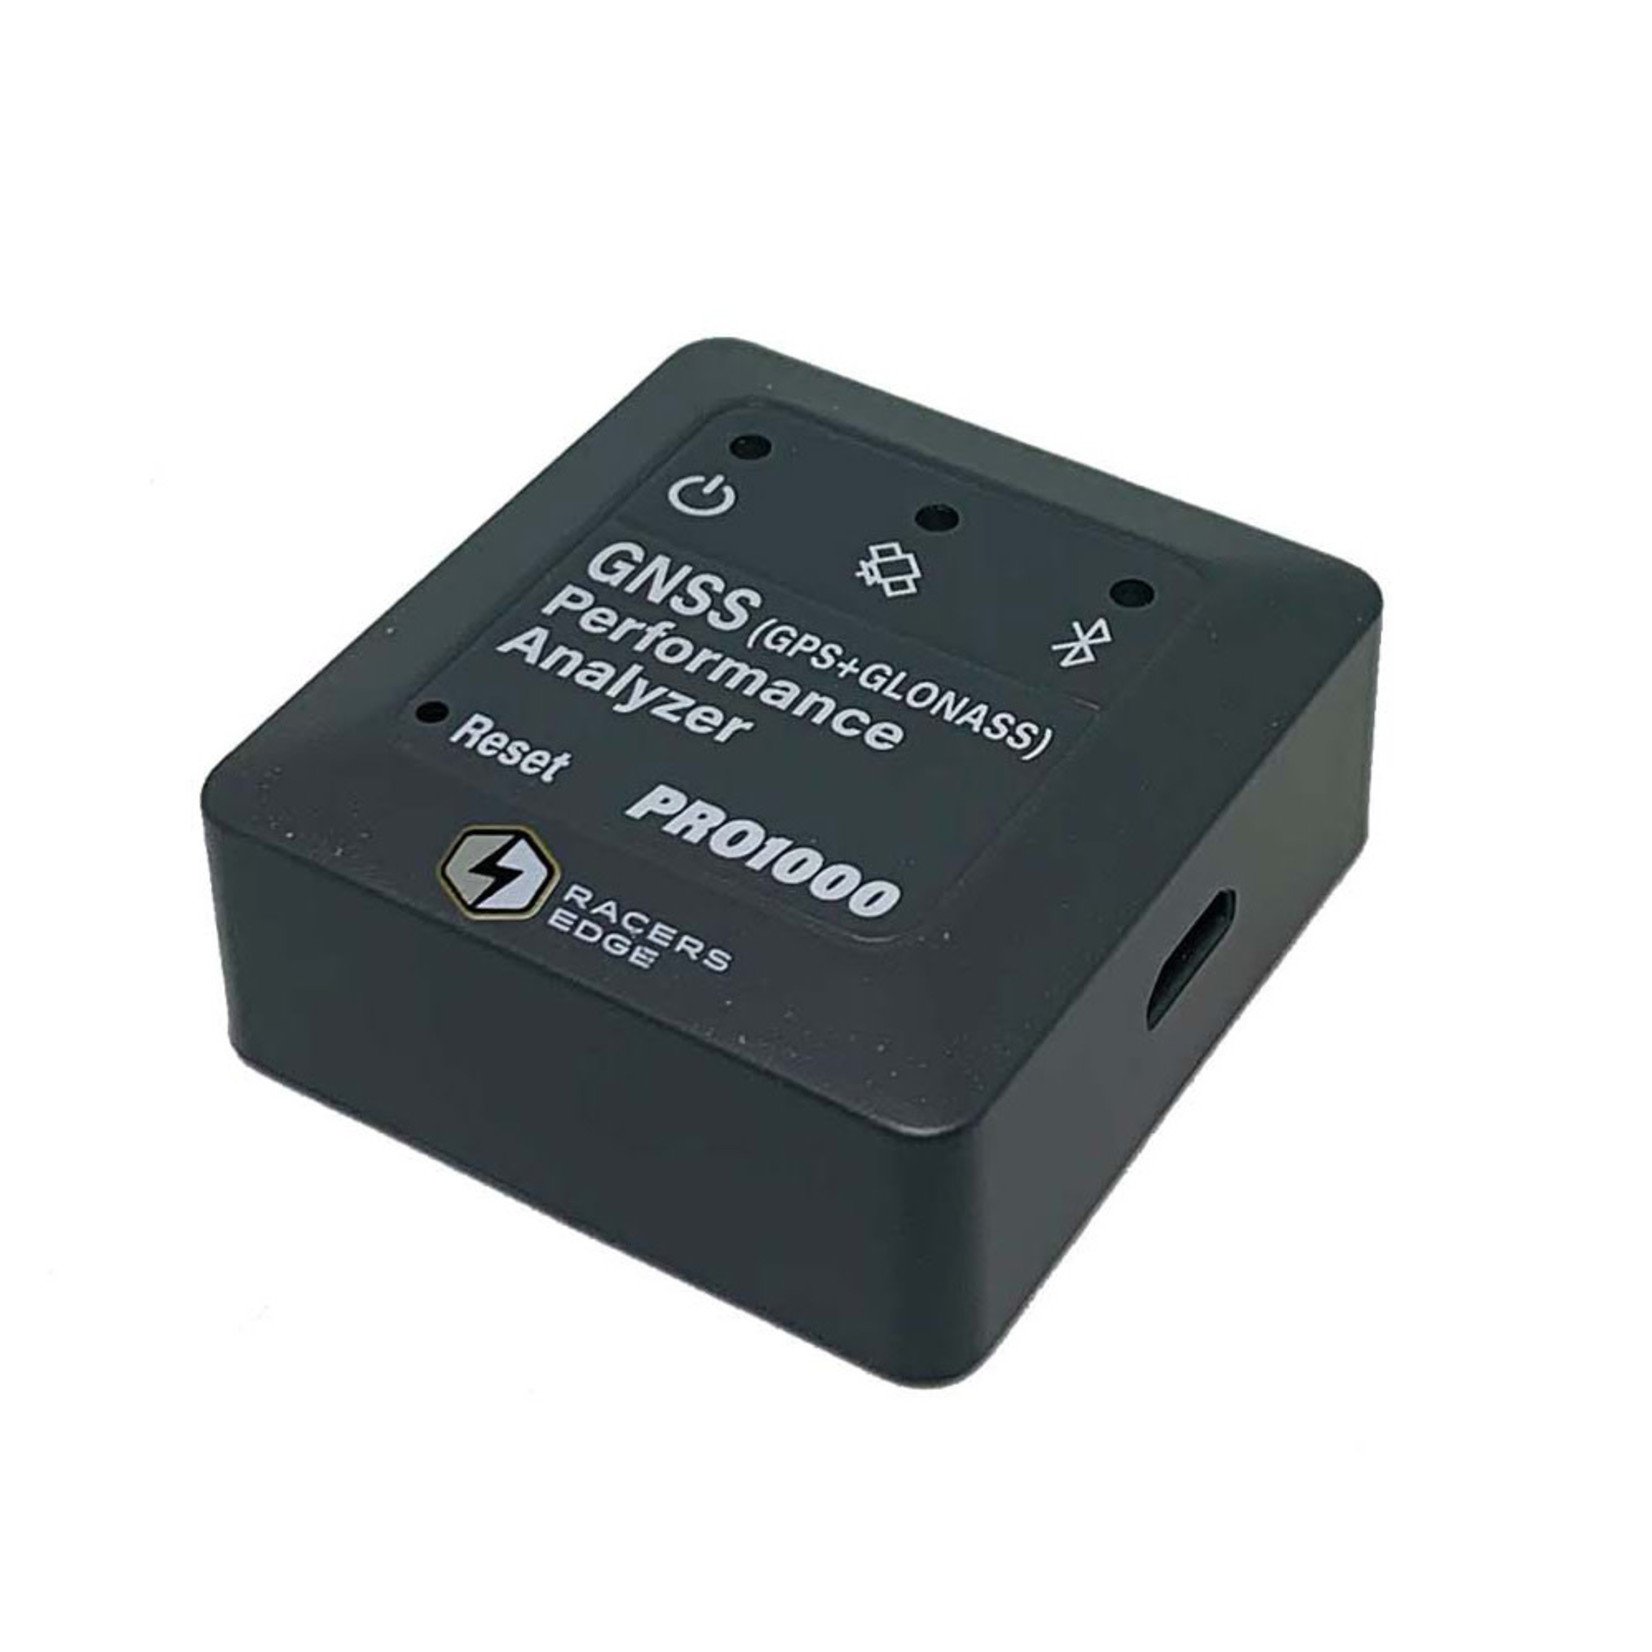 Racers Edge Racer's Edge GNSS Performance Analyzer Bluetooth GPS Speed Meter #PRO1000